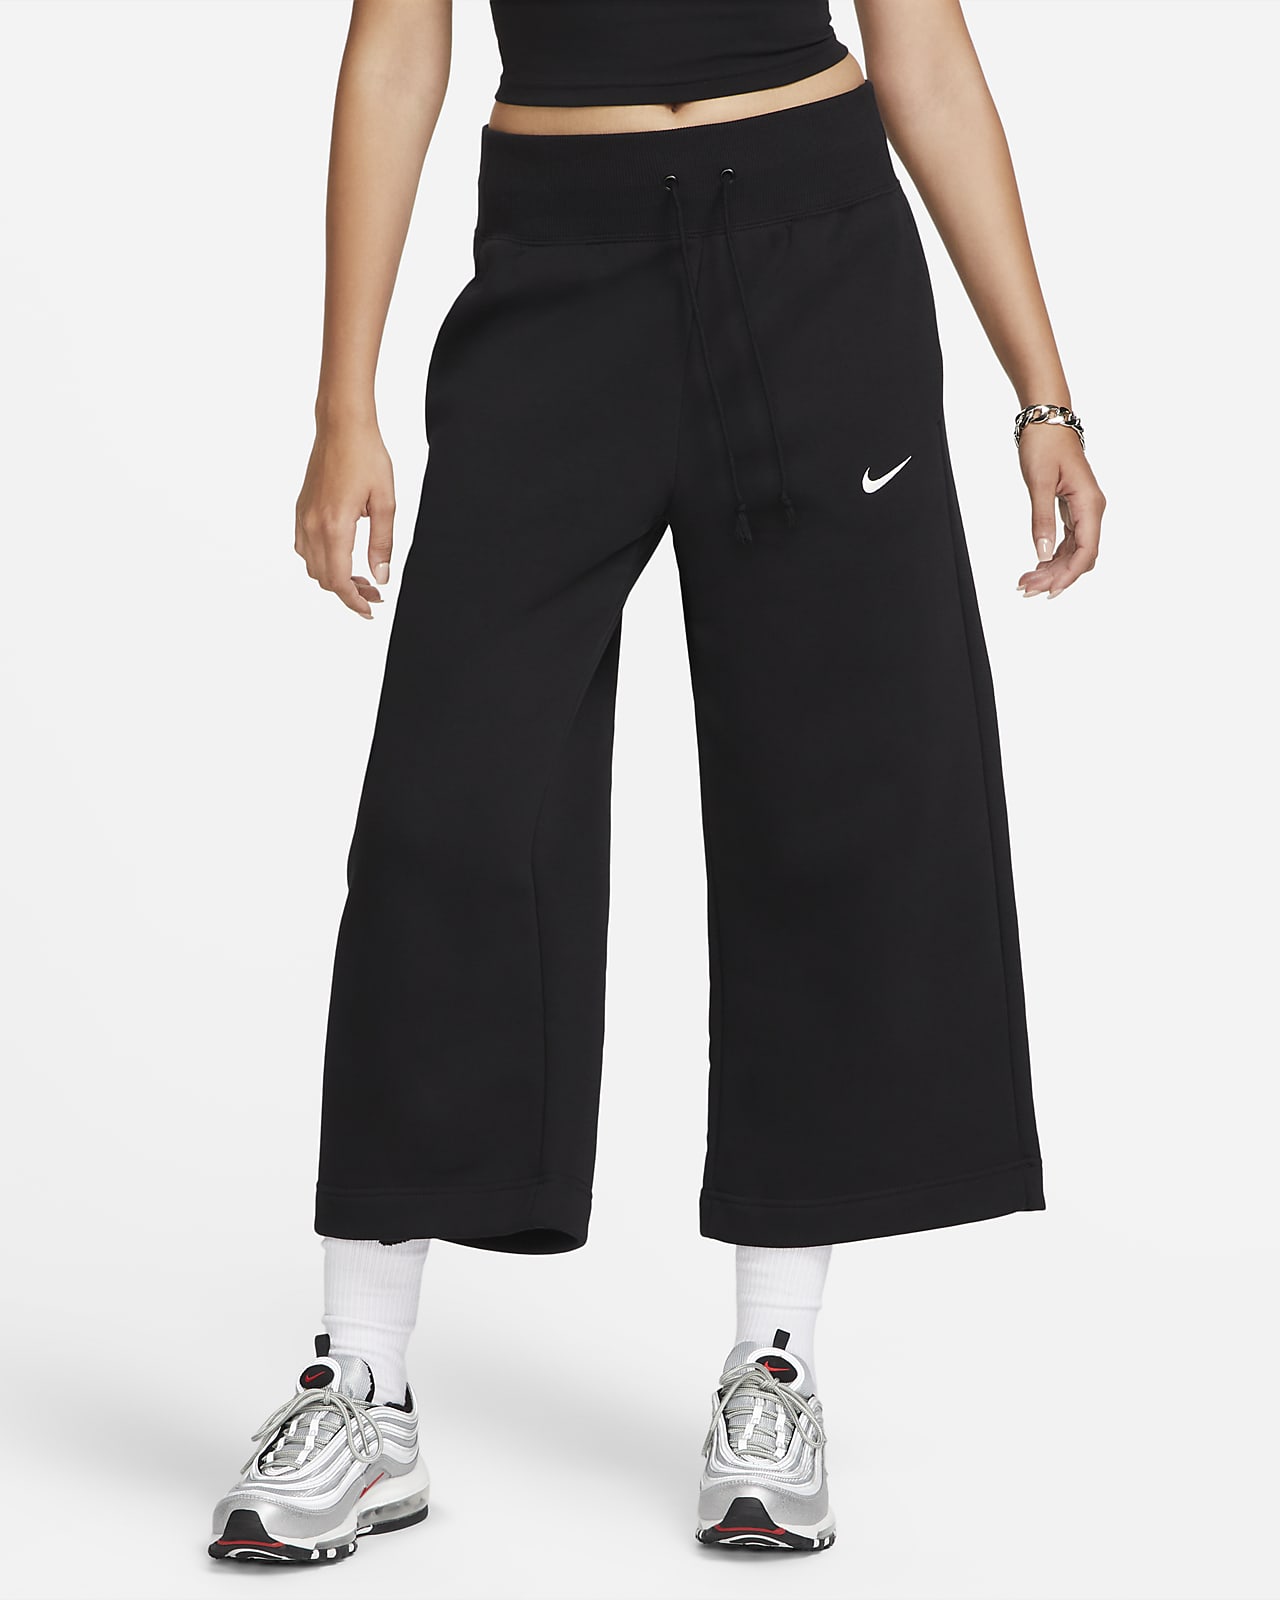 Korte Nike Sportswear Phoenix Fleece-sweatpants med høj talje til kvinder